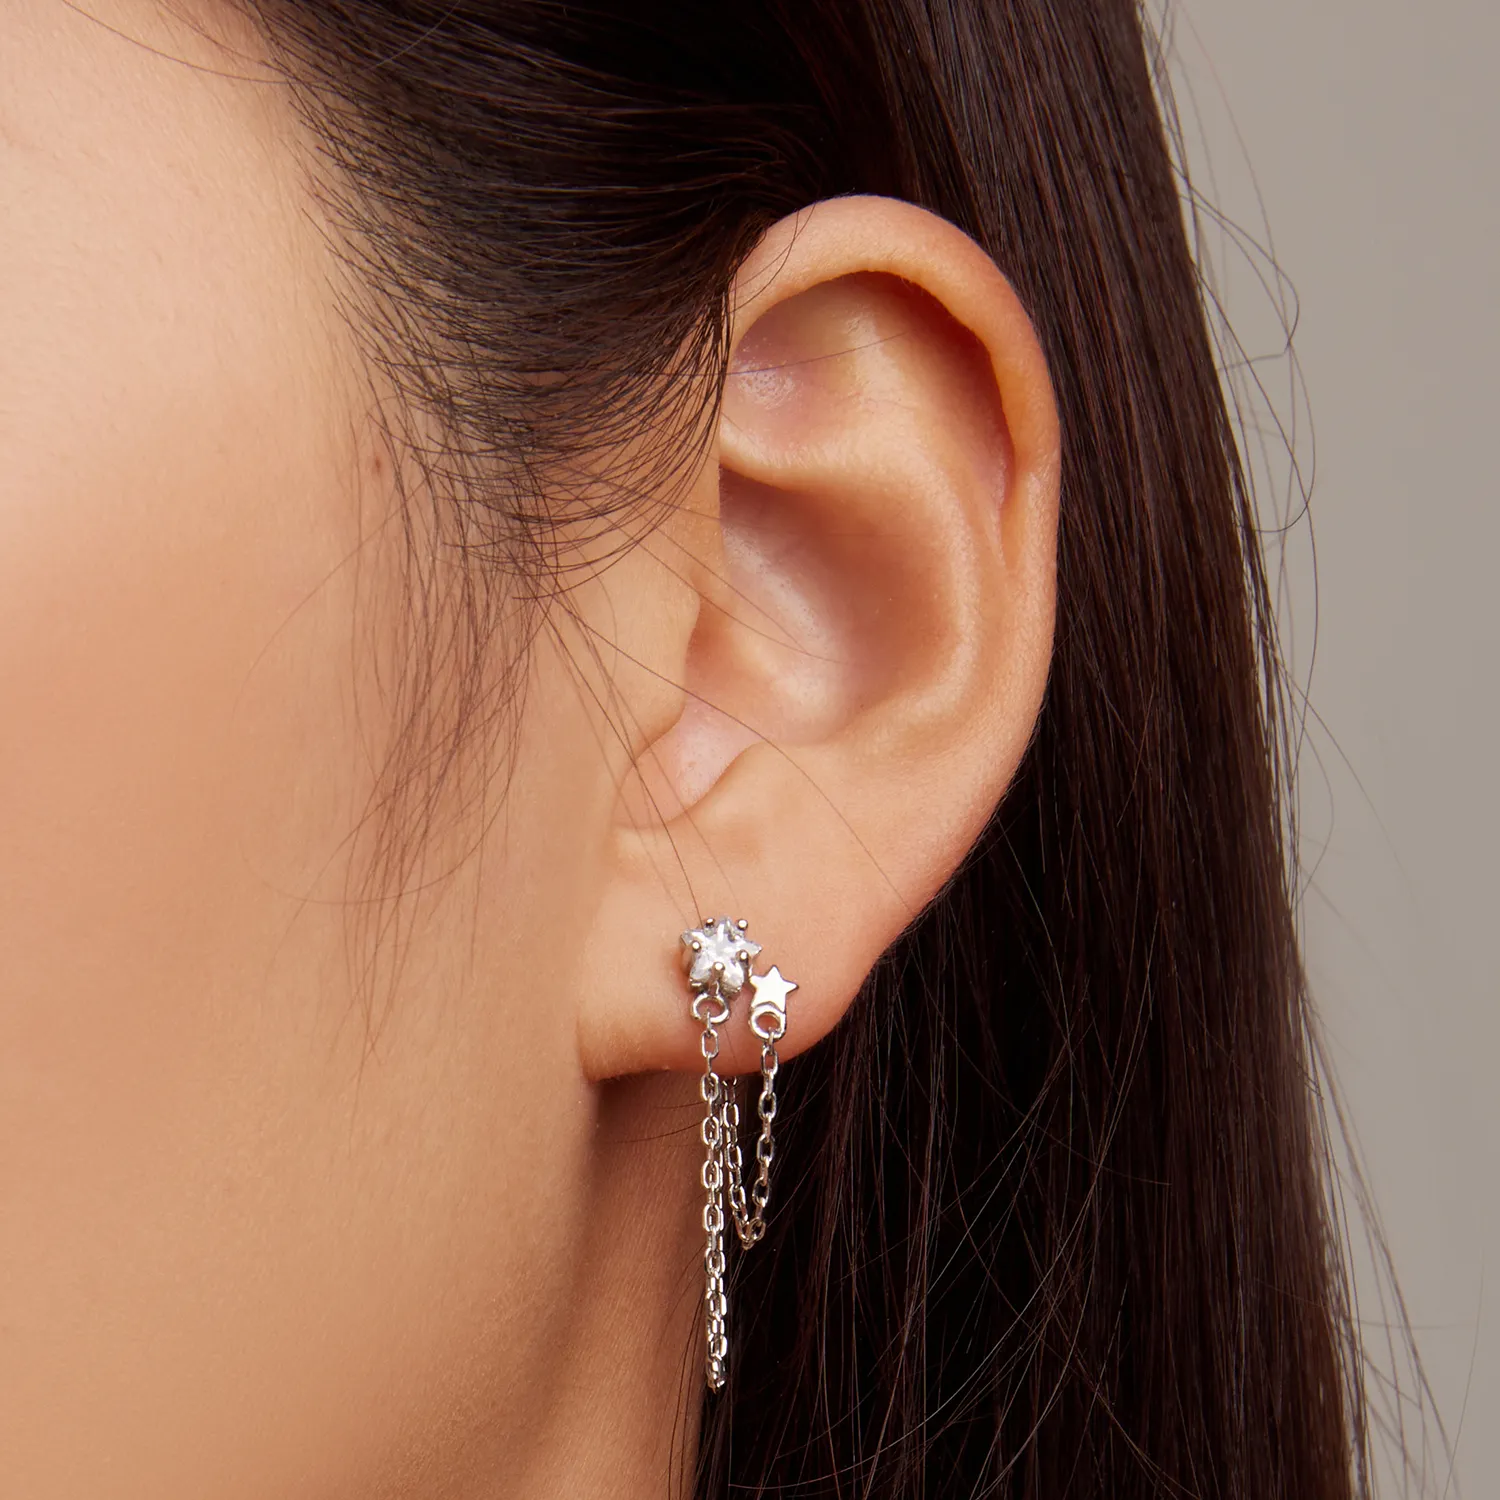 Pandora Style Star Tassel Hanging Earrings - BSE709